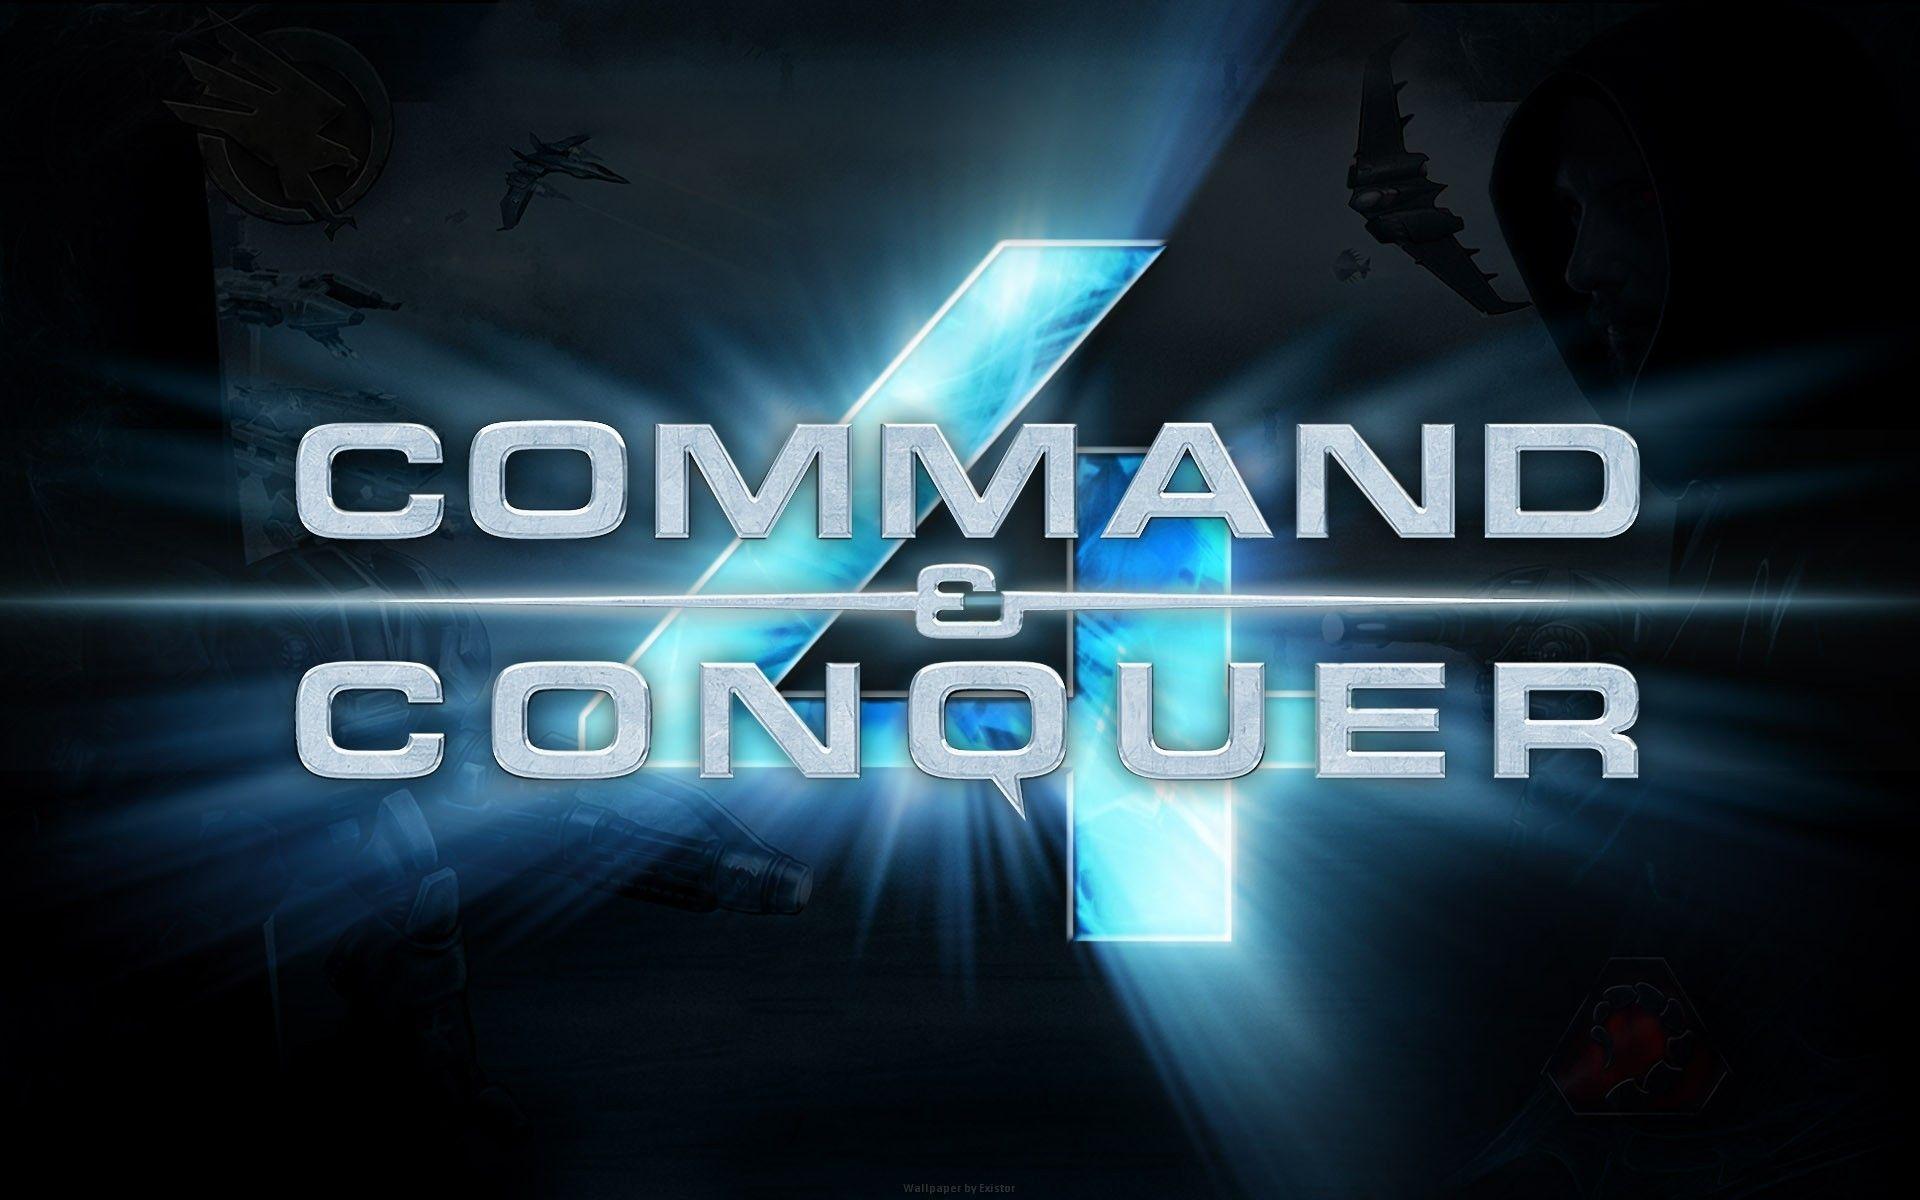 Command & Conquer 4 Tiberian Twilight Wallpaper Wallpaper 75001